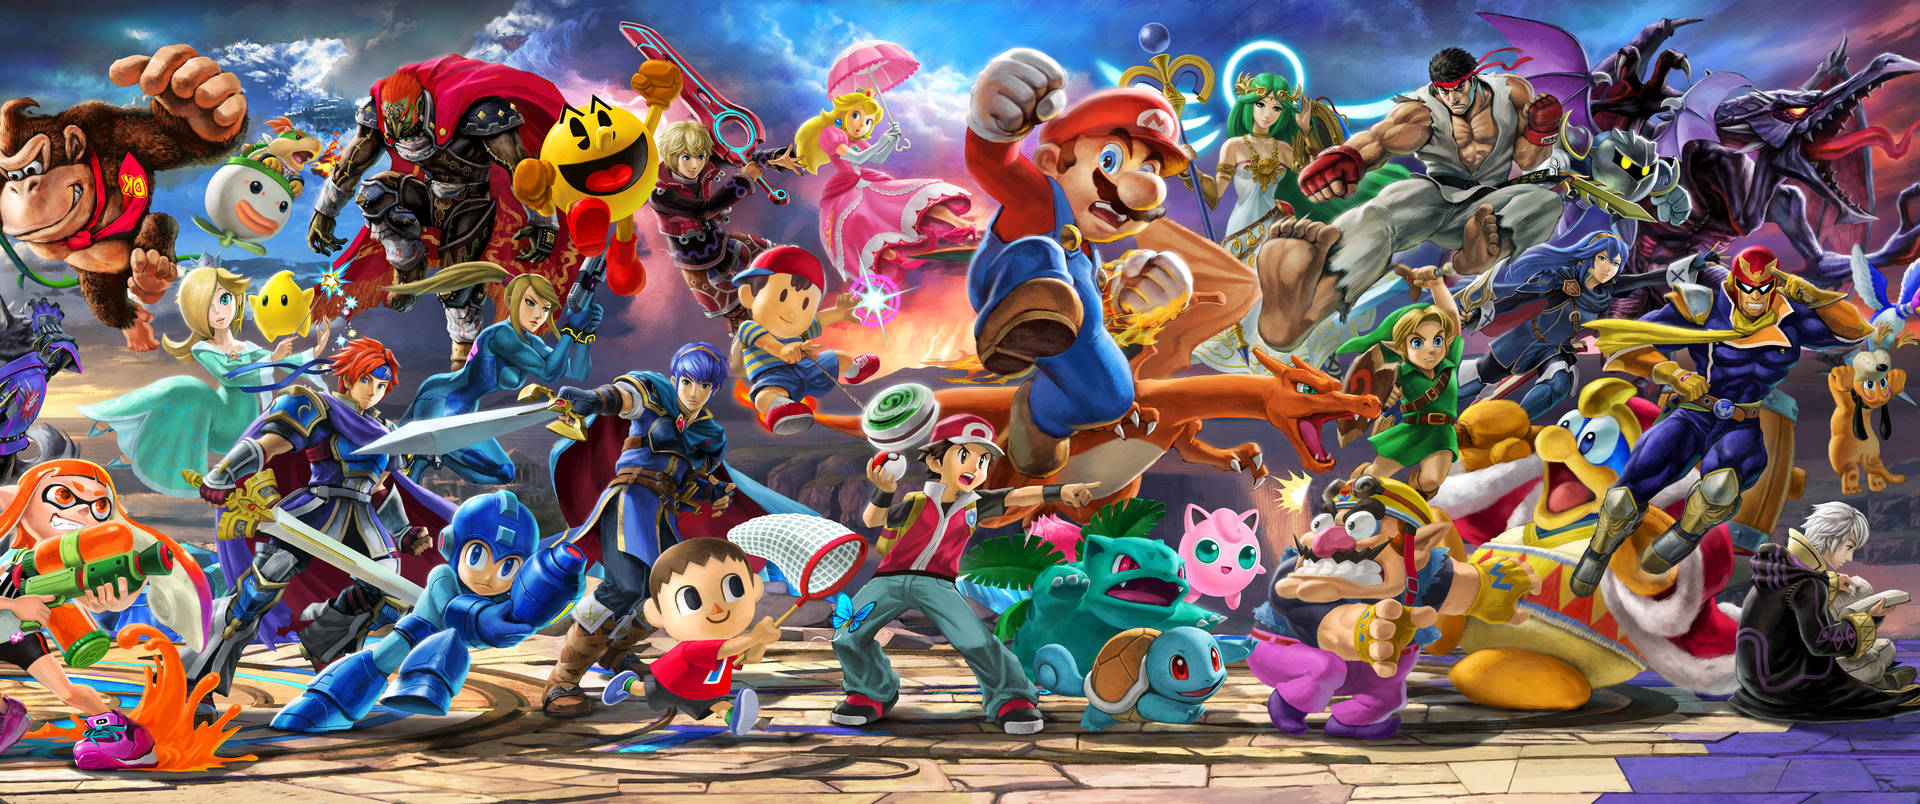 Top 999+ Smash Bros Ultimate Wallpaper Full HD, 4K✅Free to Use